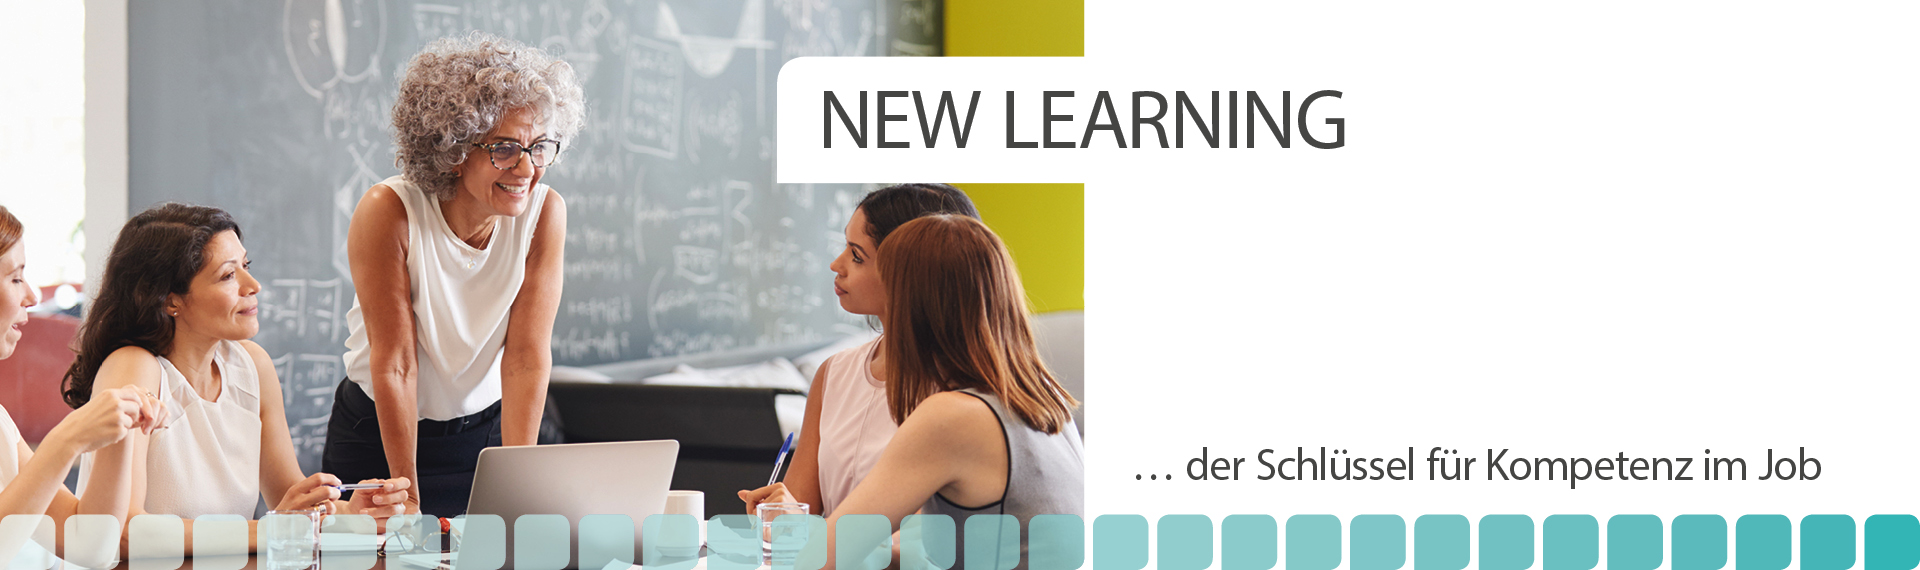 femkom-Projekt New Learning – Empowerment digitaler Fähigkeiten